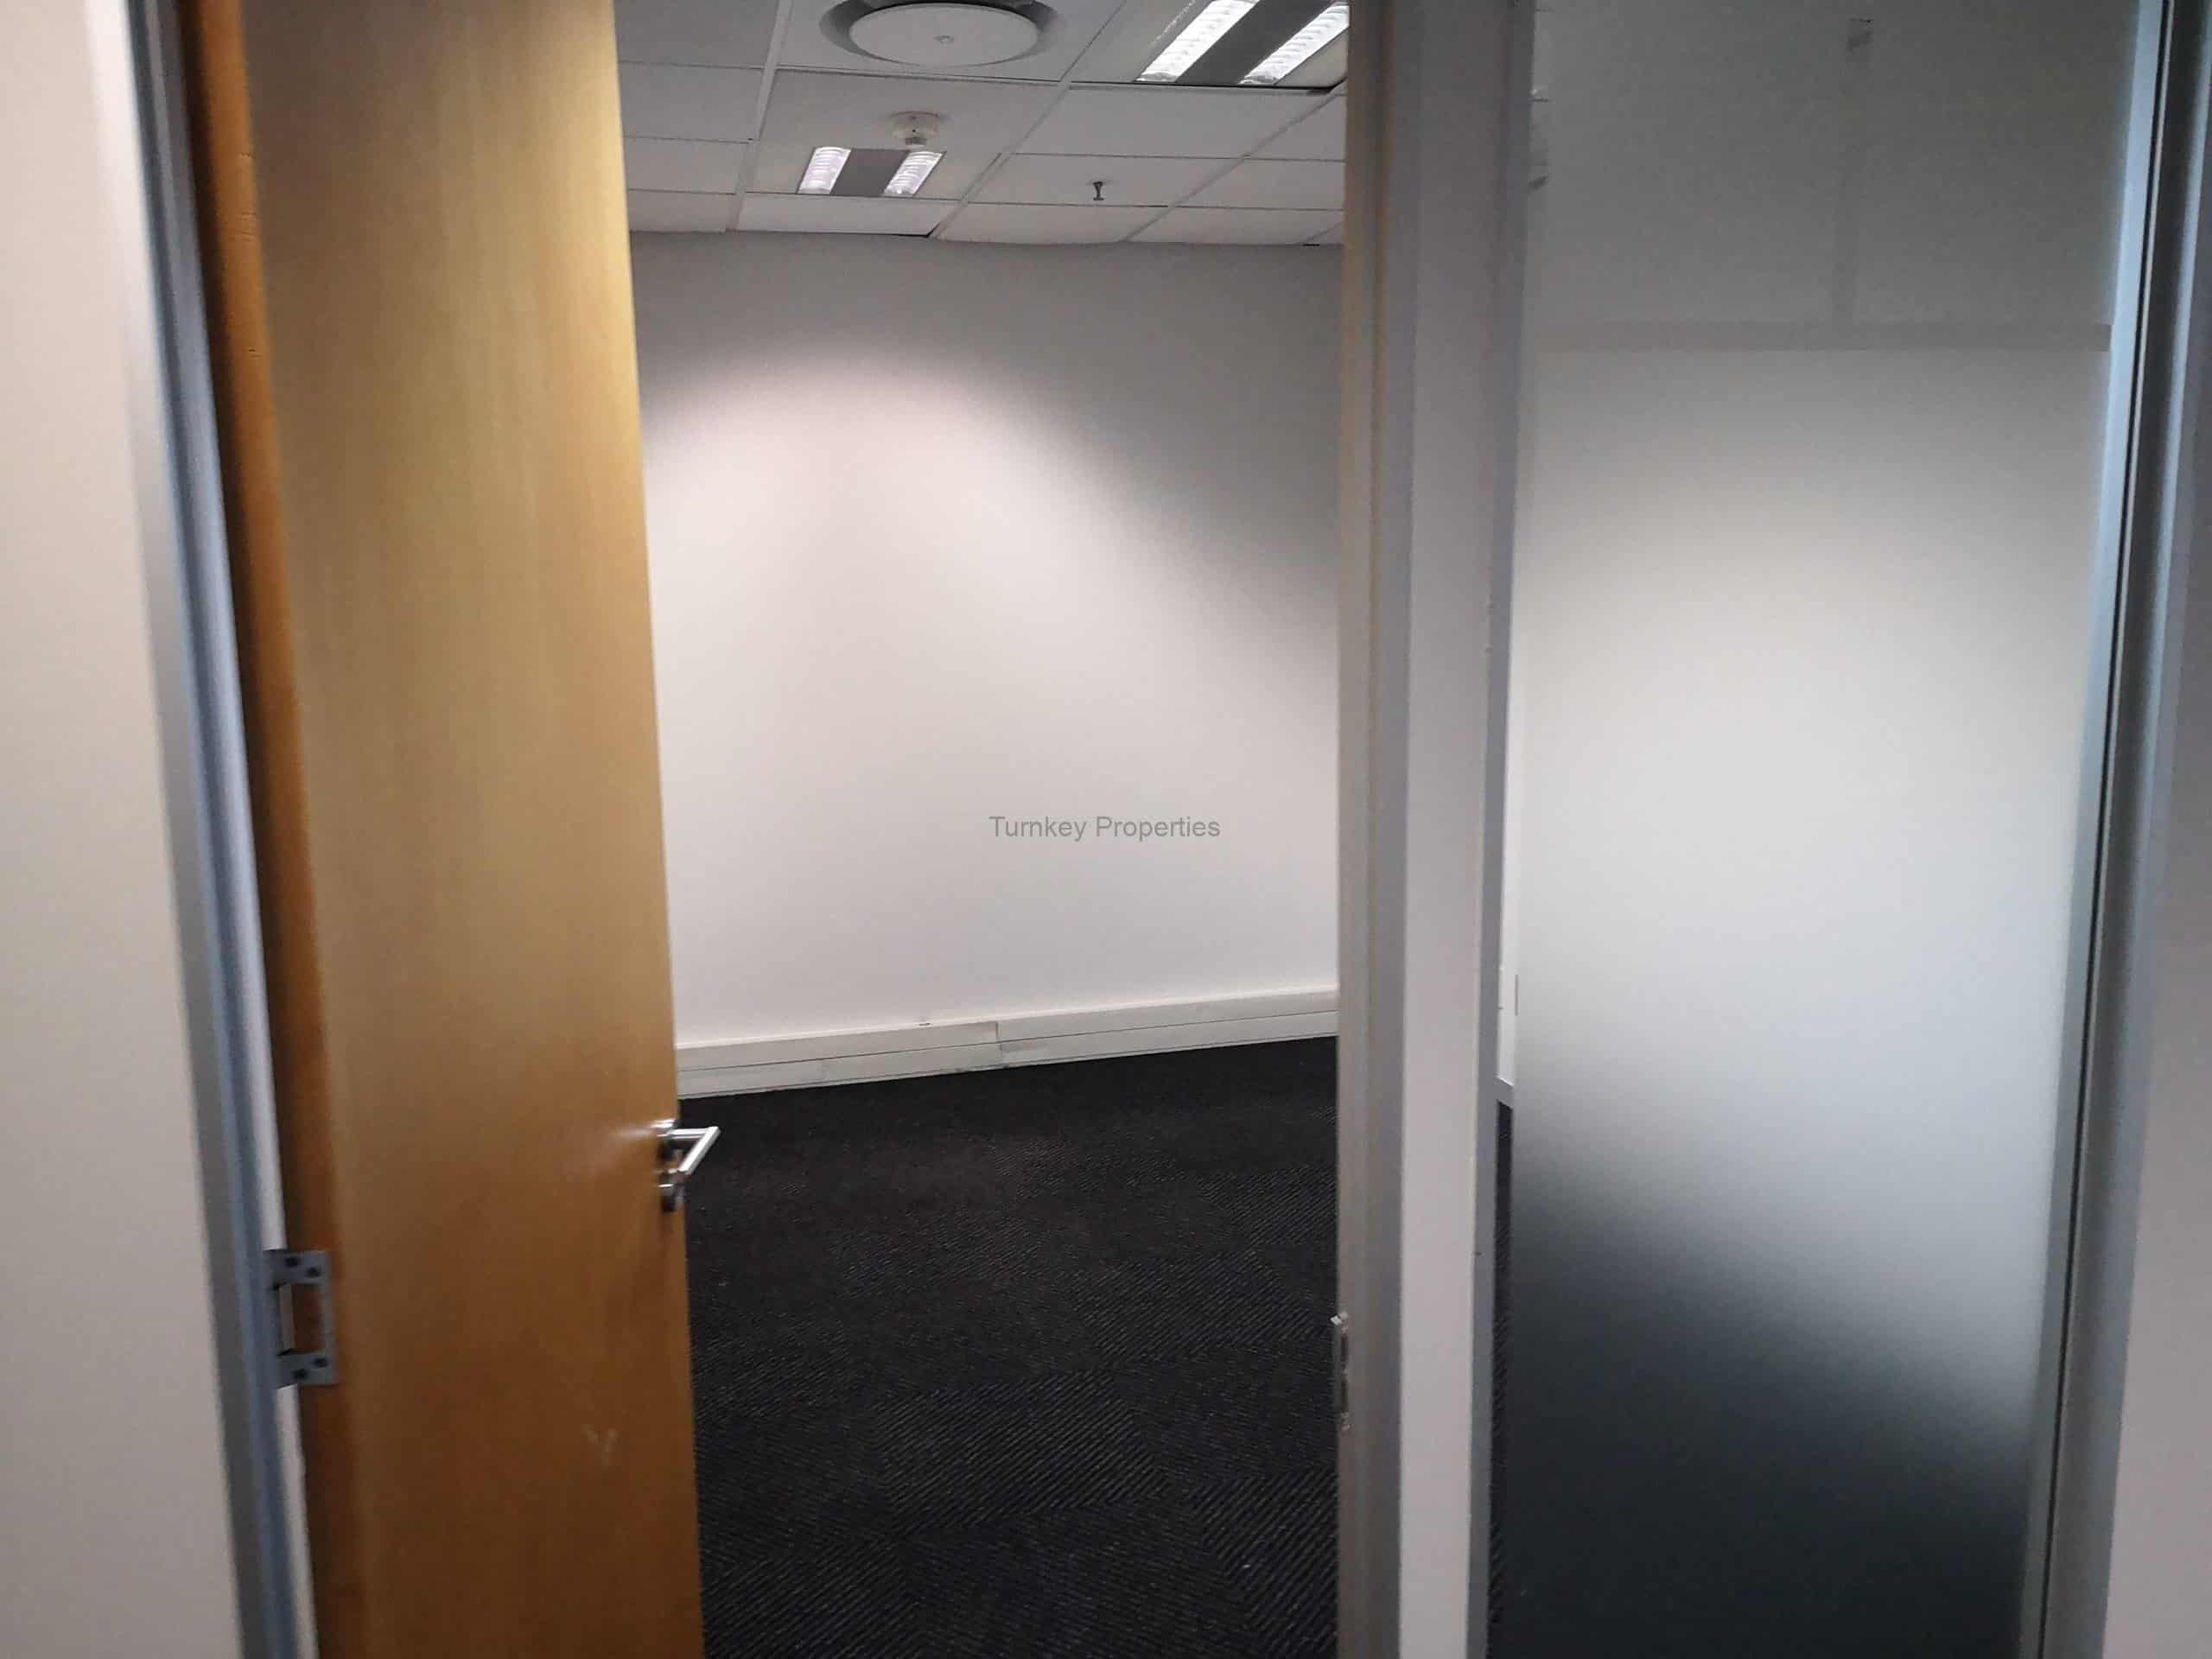 477 m² Office Space to Rent Rosebank 1 Sixty Jan Smuts